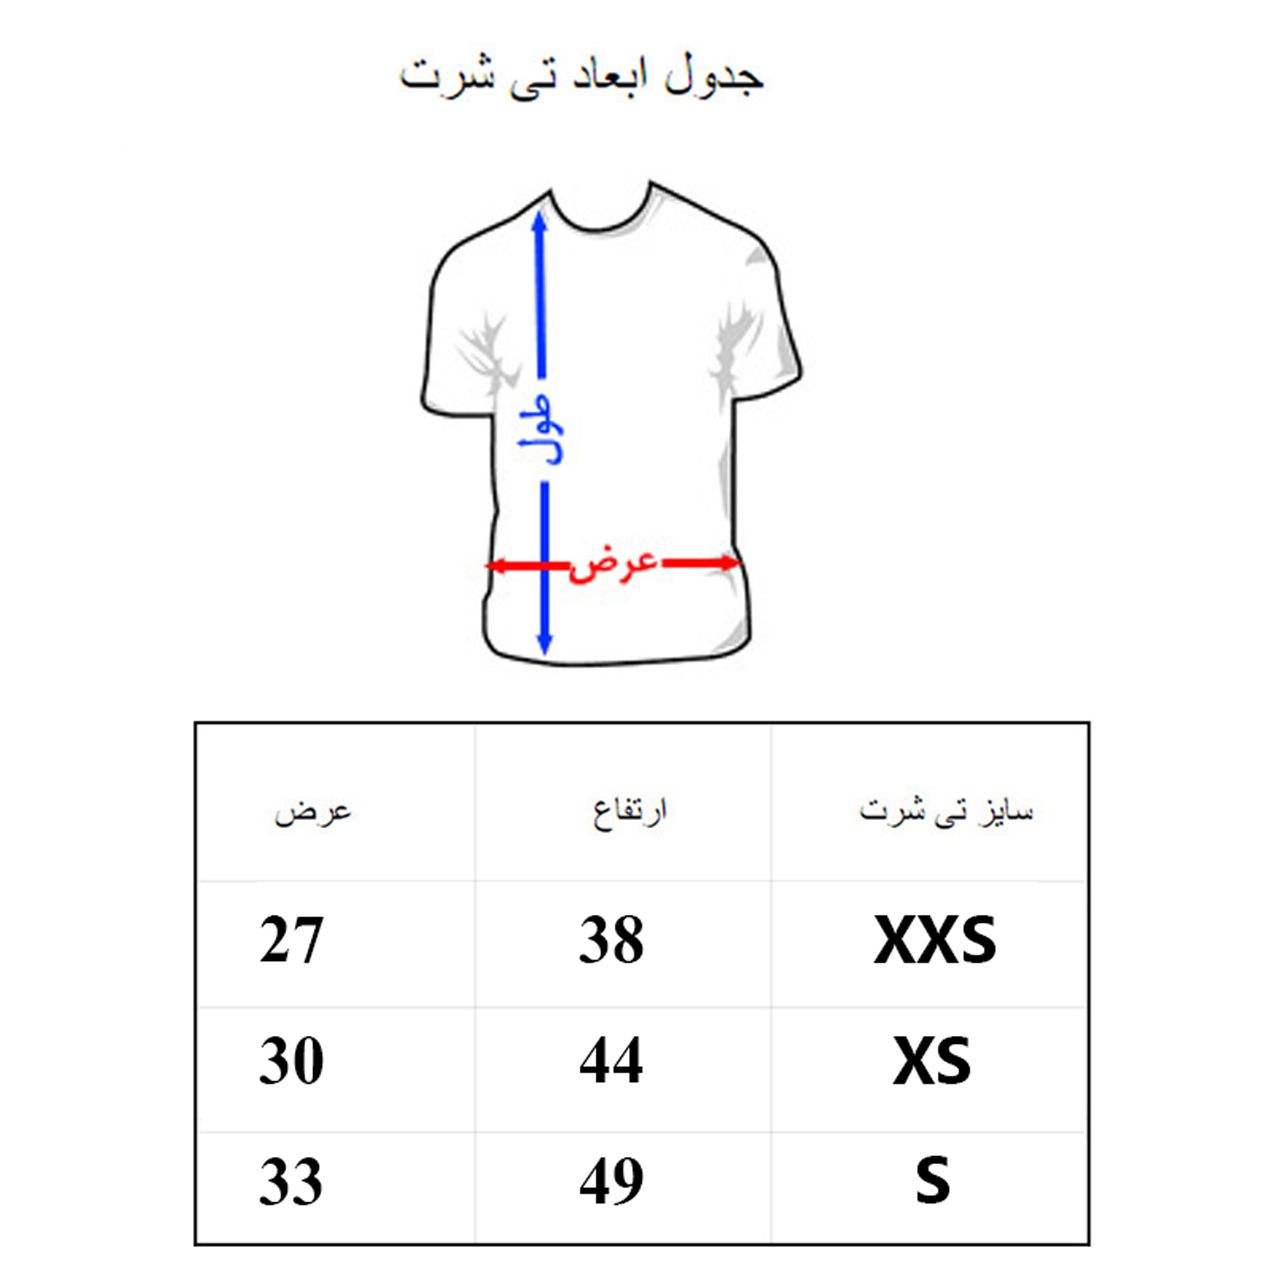 تی شرت پسرانه به رسم طرح لوراکس کد 9911 -  - 2